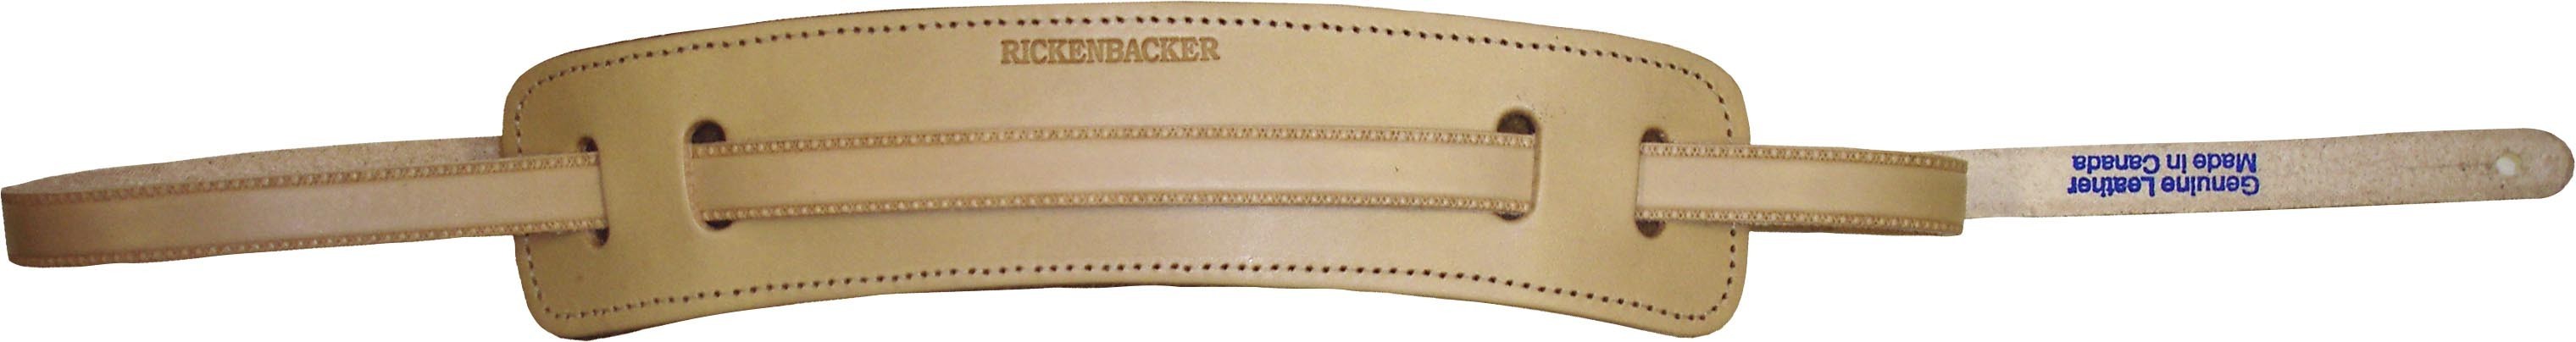 Rickenbacker Leather Strap, Natural